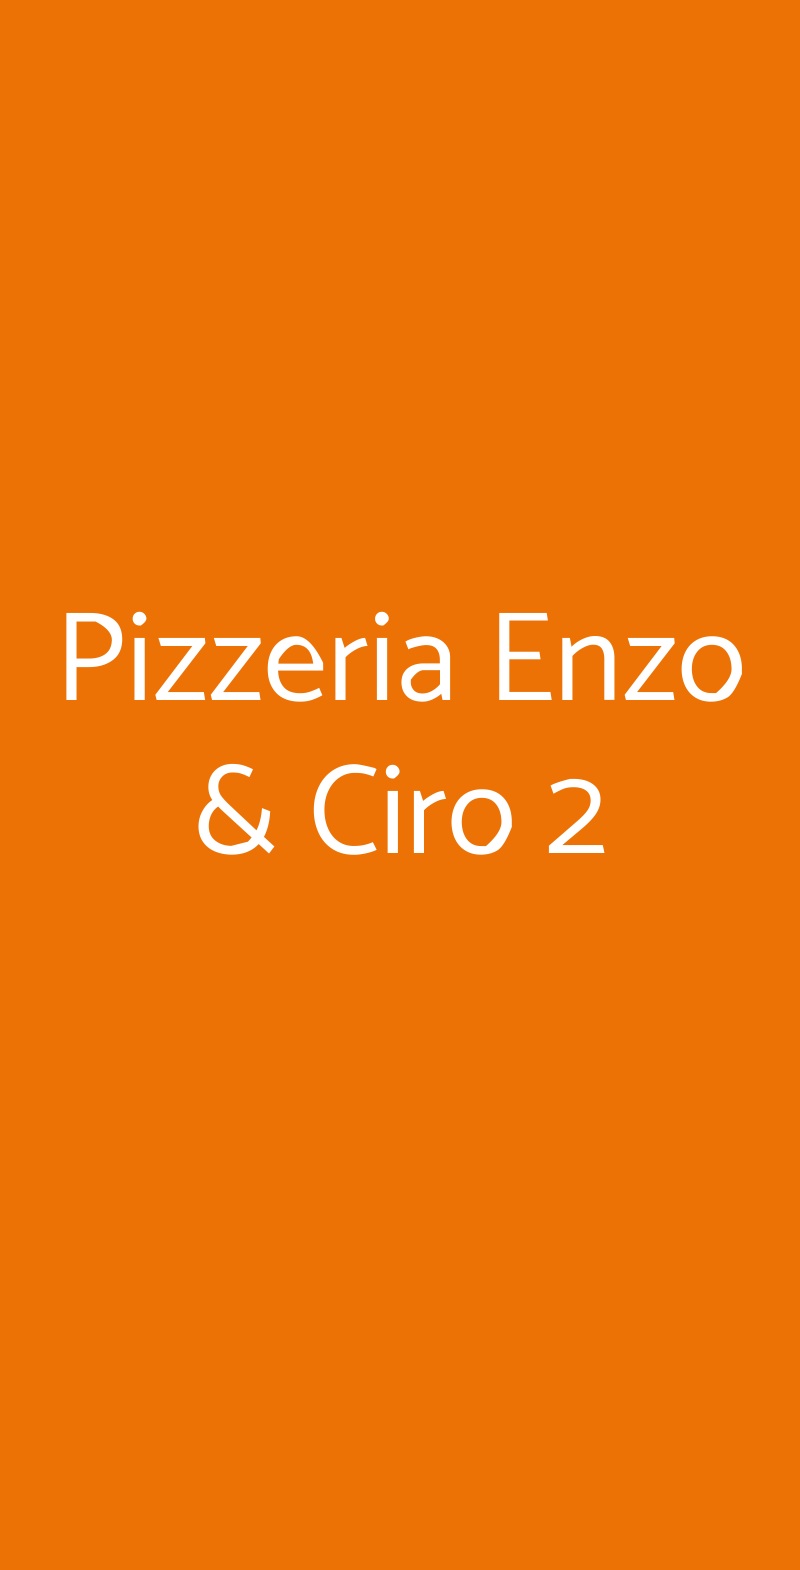 Pizzeria Enzo & Ciro 2 Bari menù 1 pagina